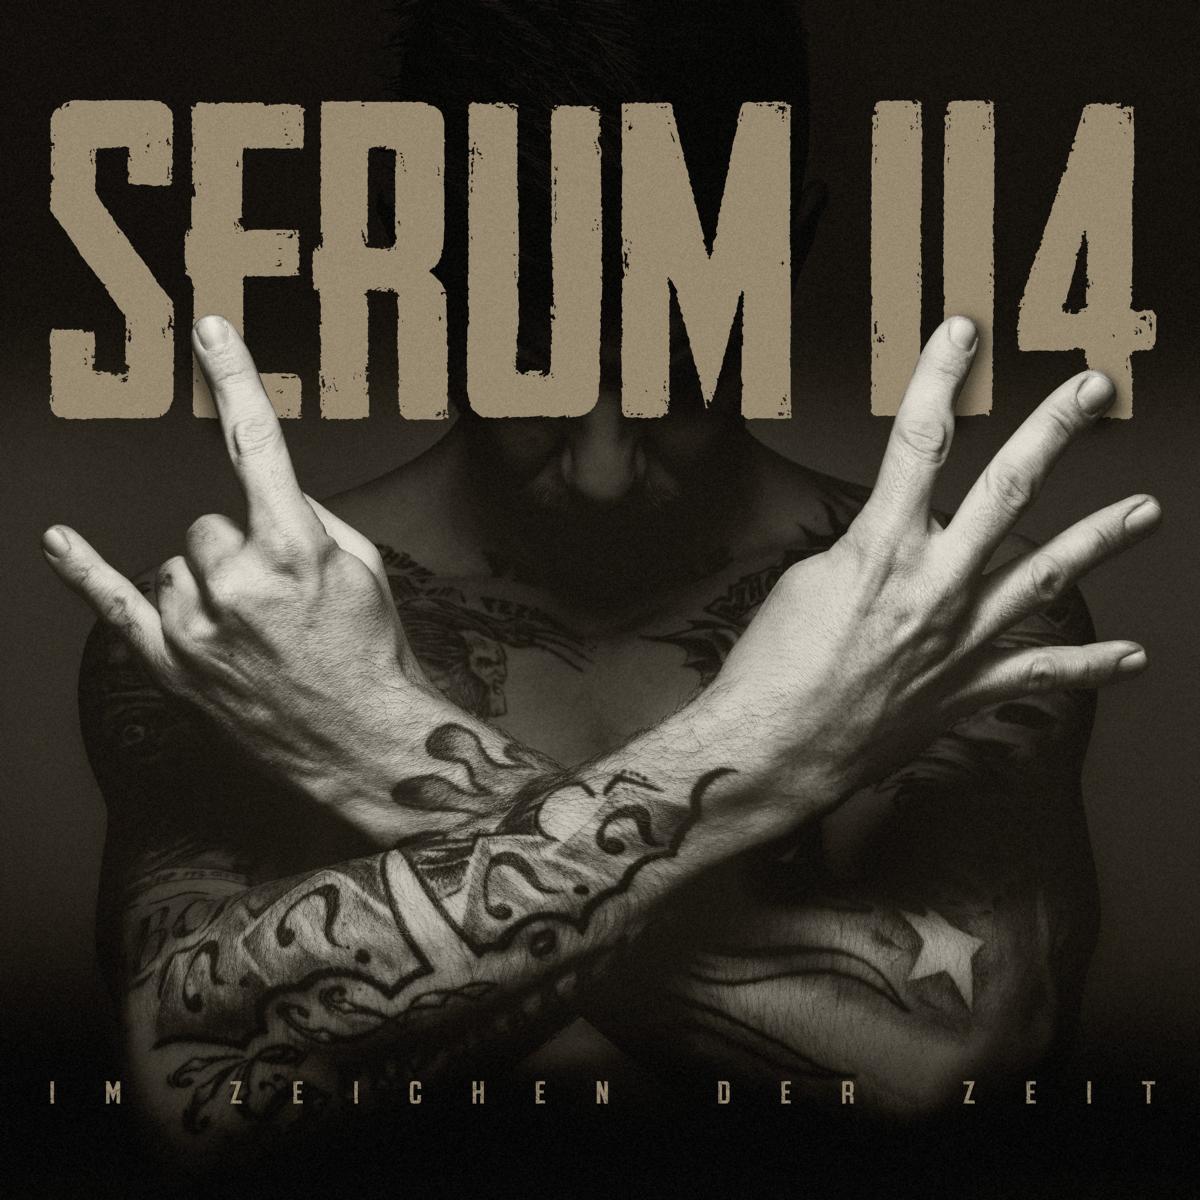 serum 114 tour